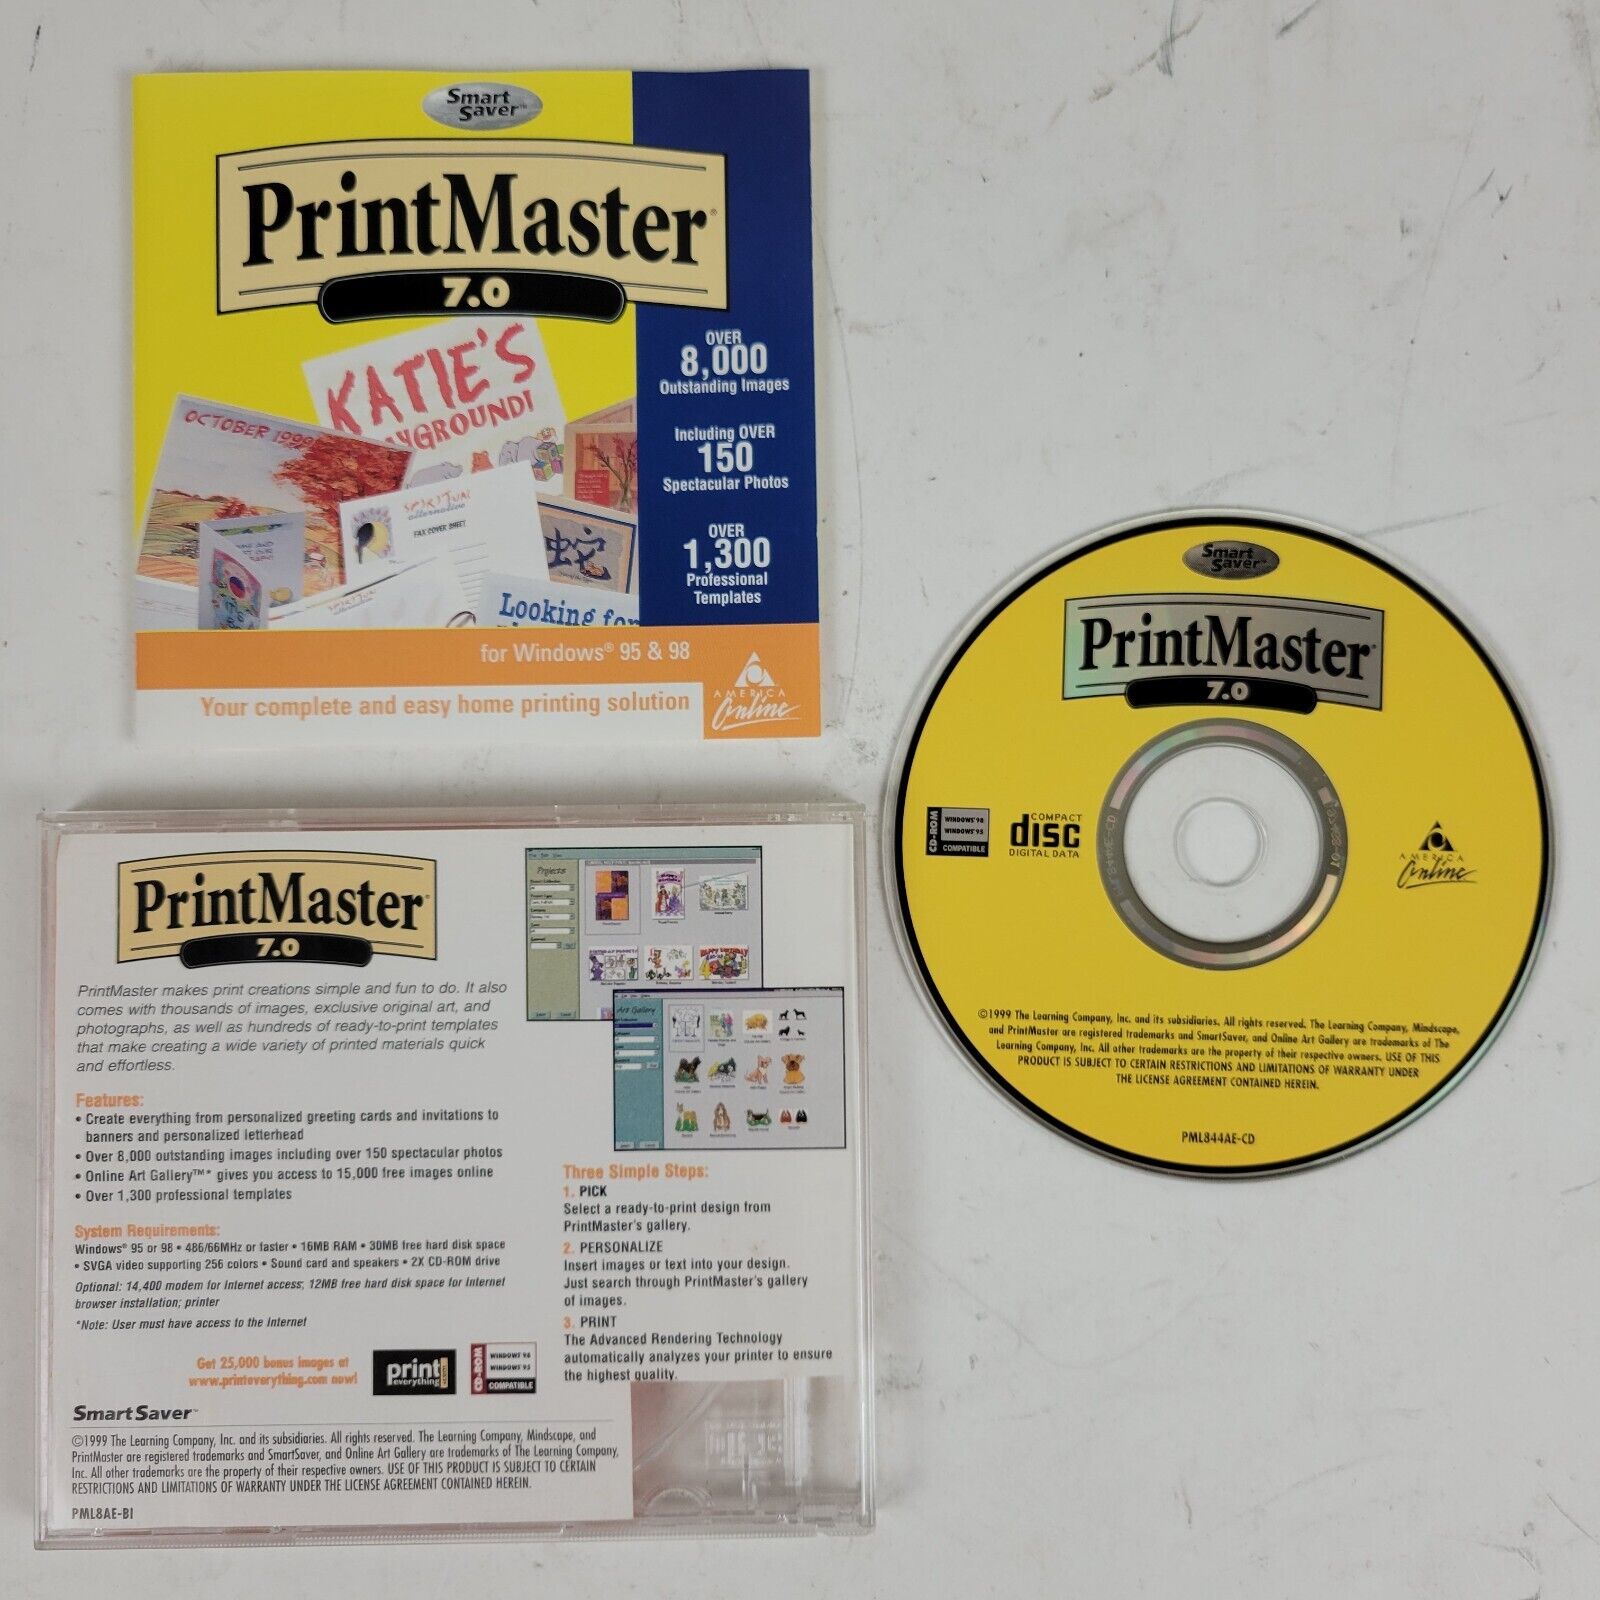 Print Master 7.0 (1999) Win 95/NT VTG Arts and Crafts Software, Smart Saver